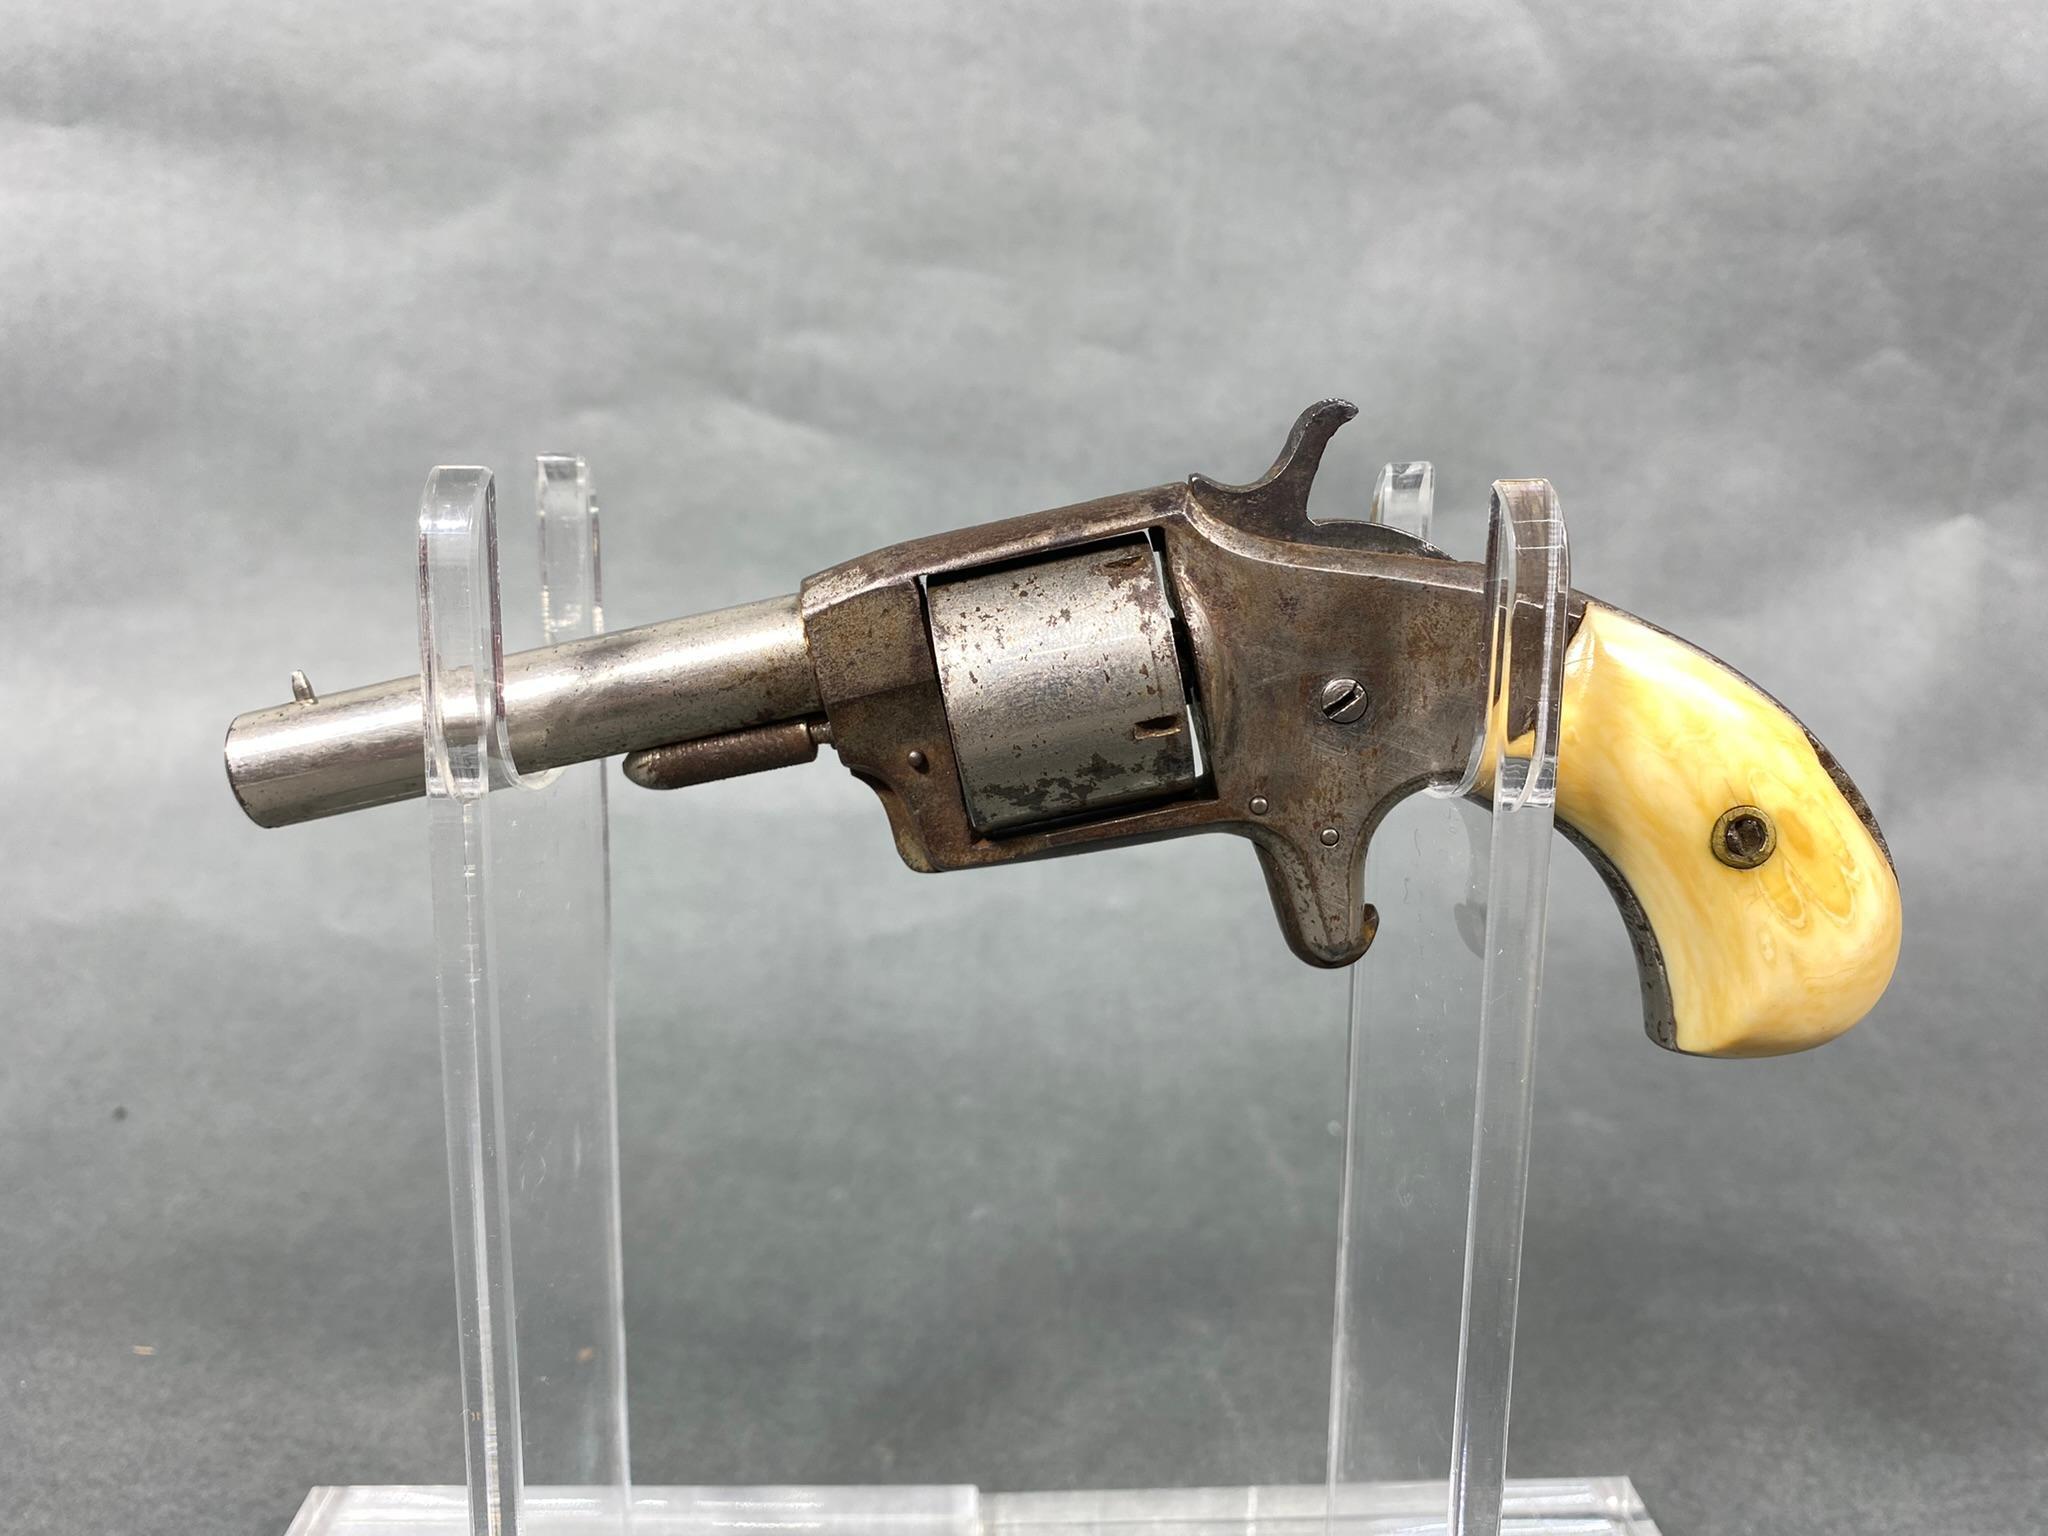 Antique Revolver Pistol "Defender" 30 Cal Colt Clone